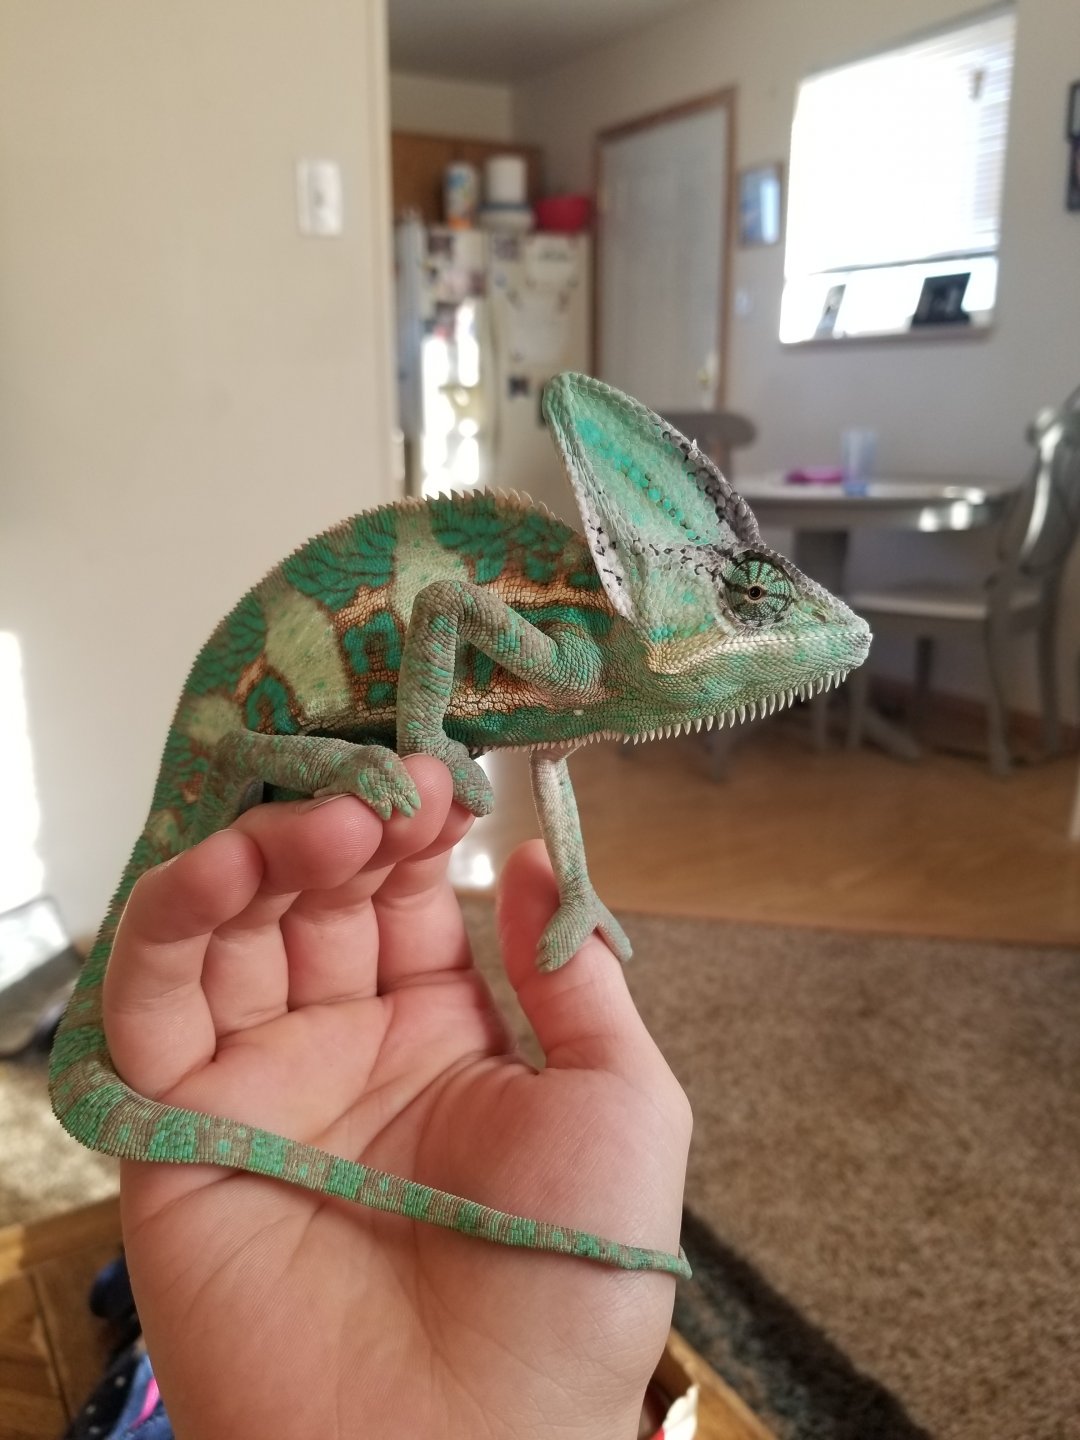 Does my chameleon look full grown? | Chameleon Forums